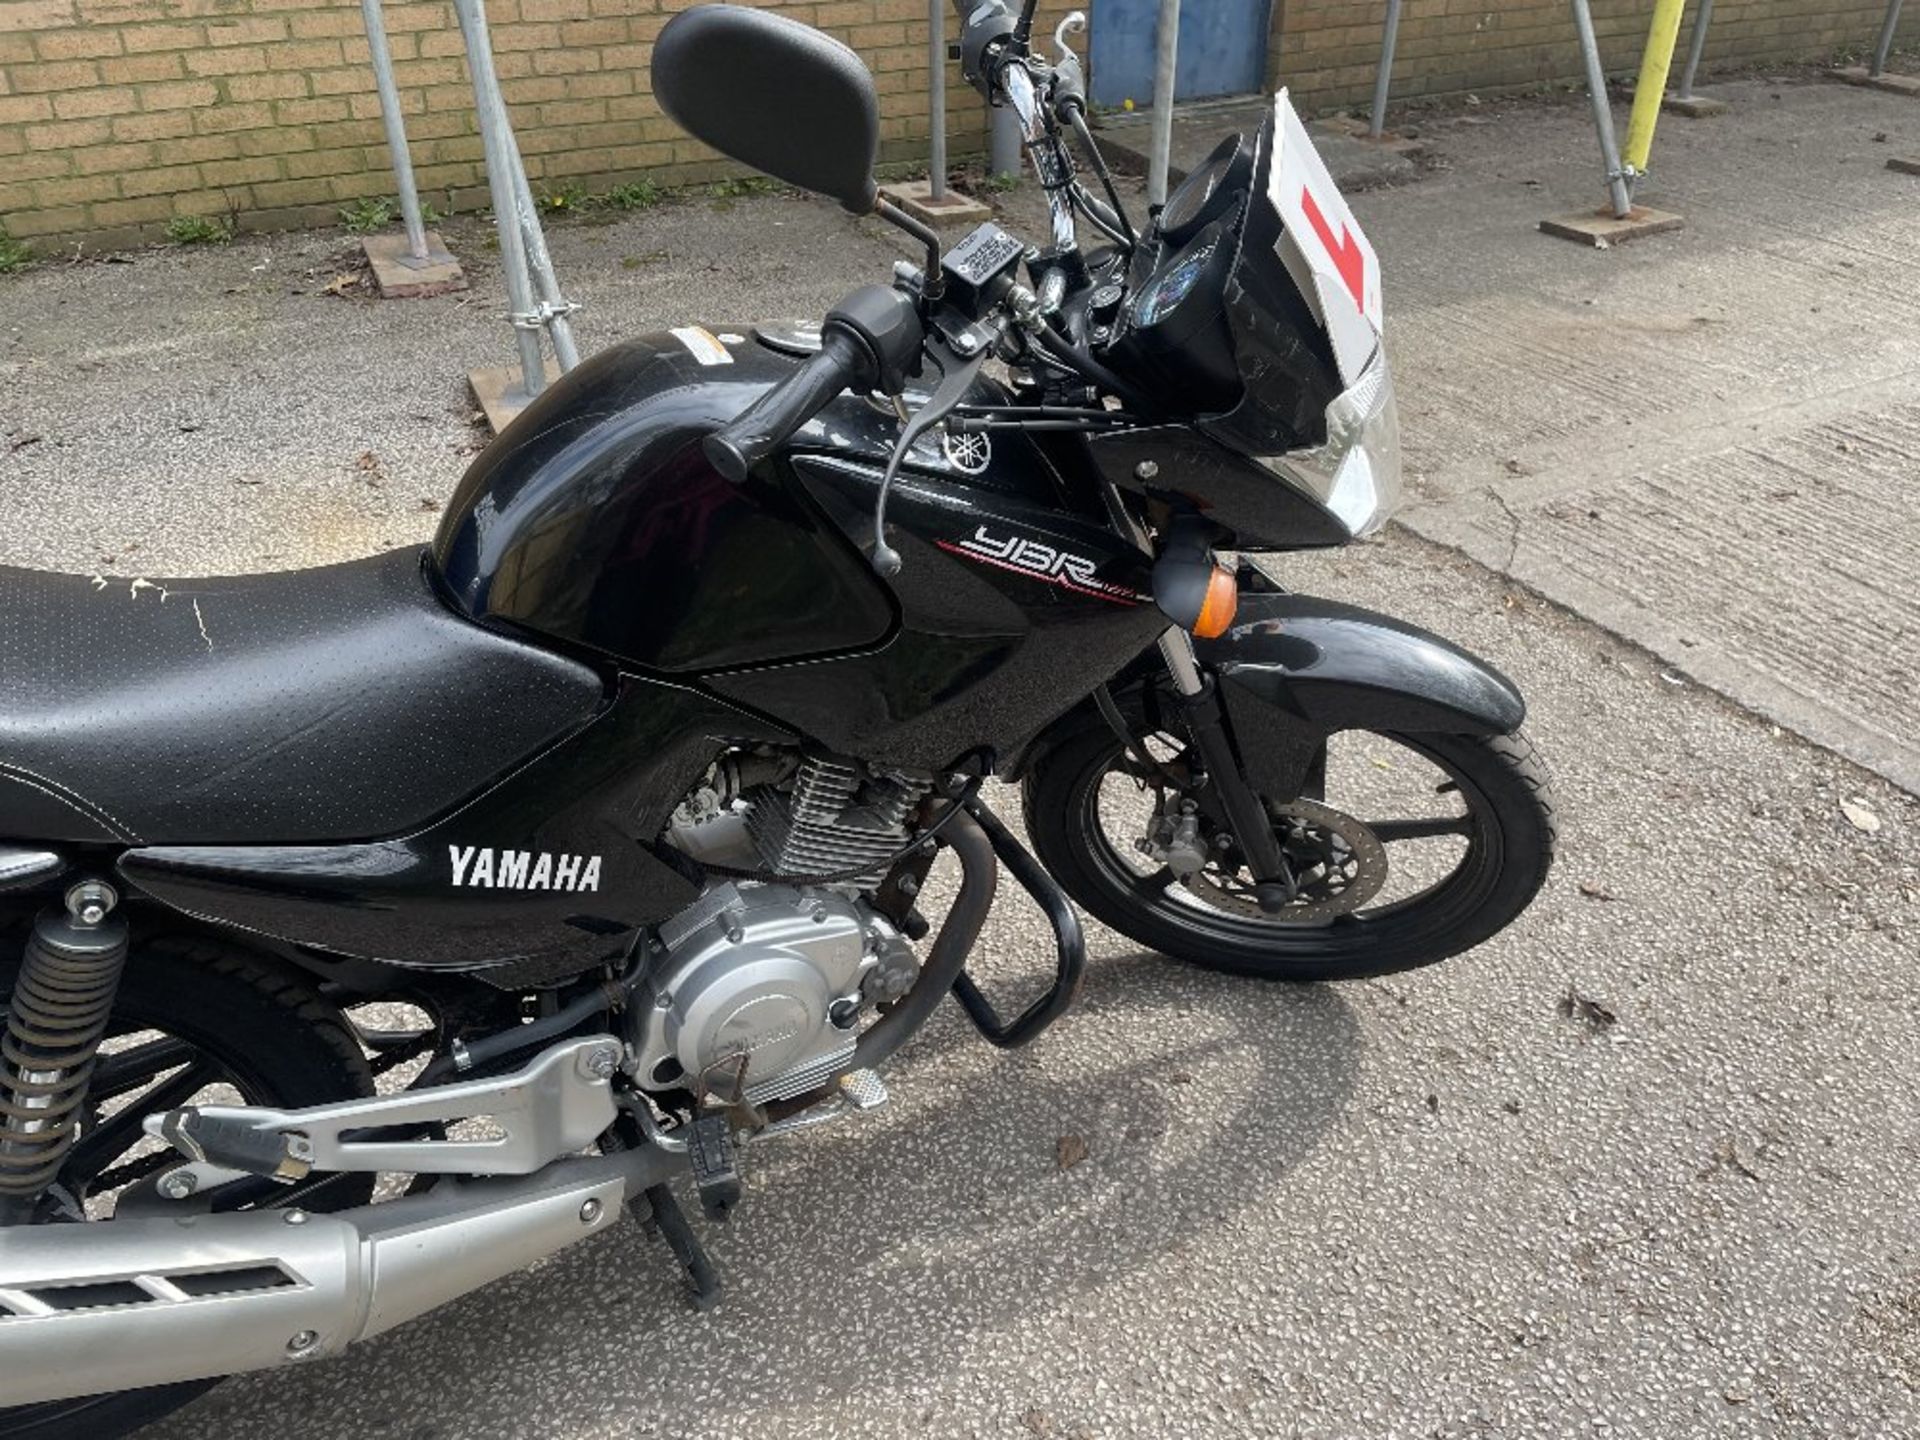 Yamaha YBR125 Petrol Motorcycle | PL15 VPM | 10,899 Miles - Image 9 of 13